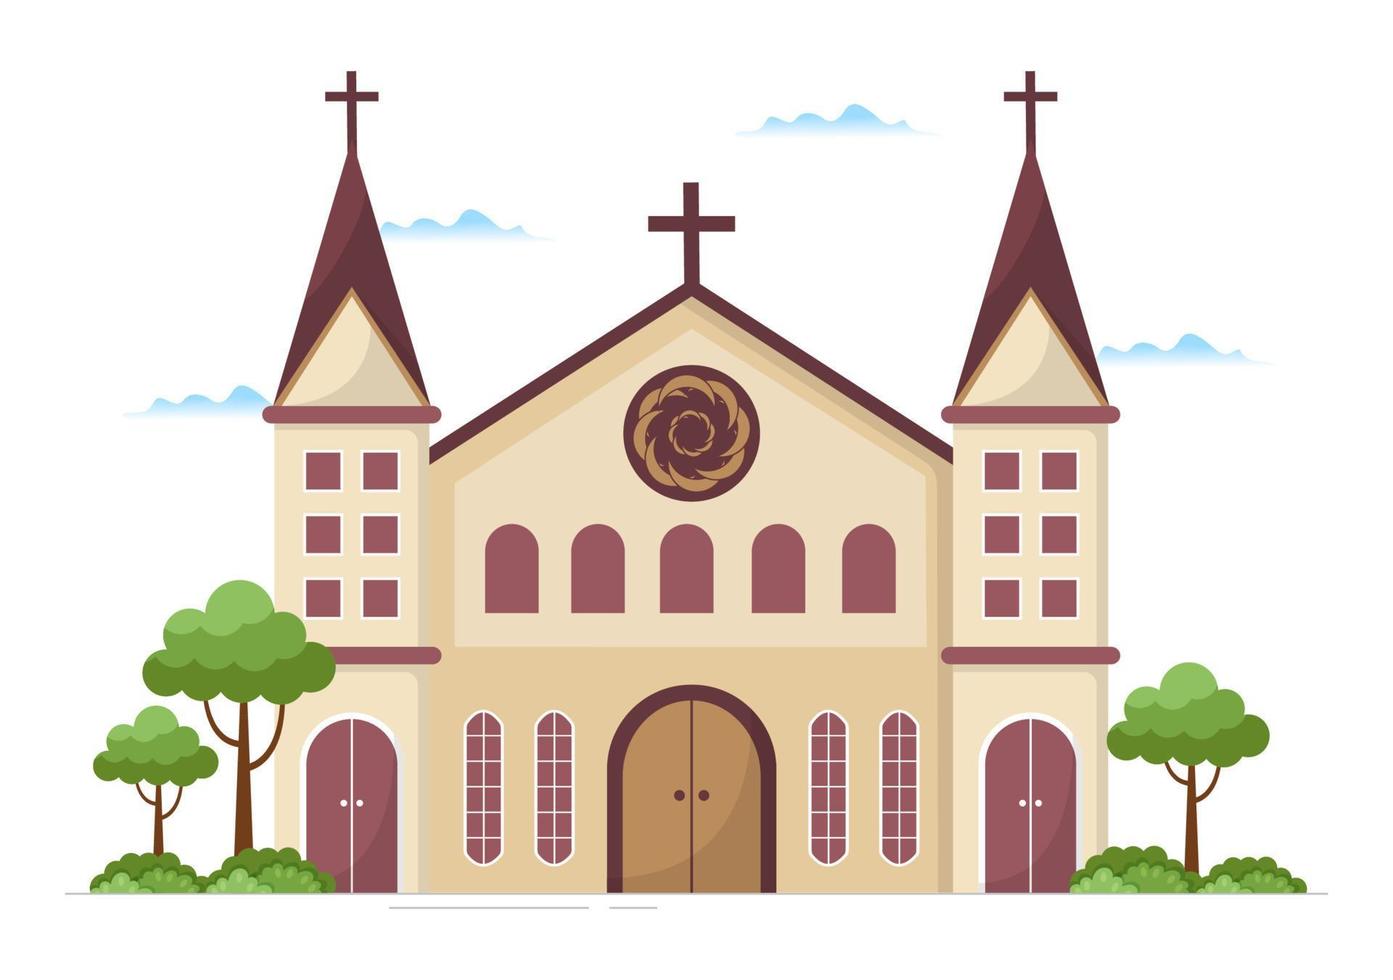 iglesia luterana con edificio de templo de catedral y arquitectura de lugar de religión cristiana en ilustración de plantilla dibujada a mano de dibujos animados planos vector